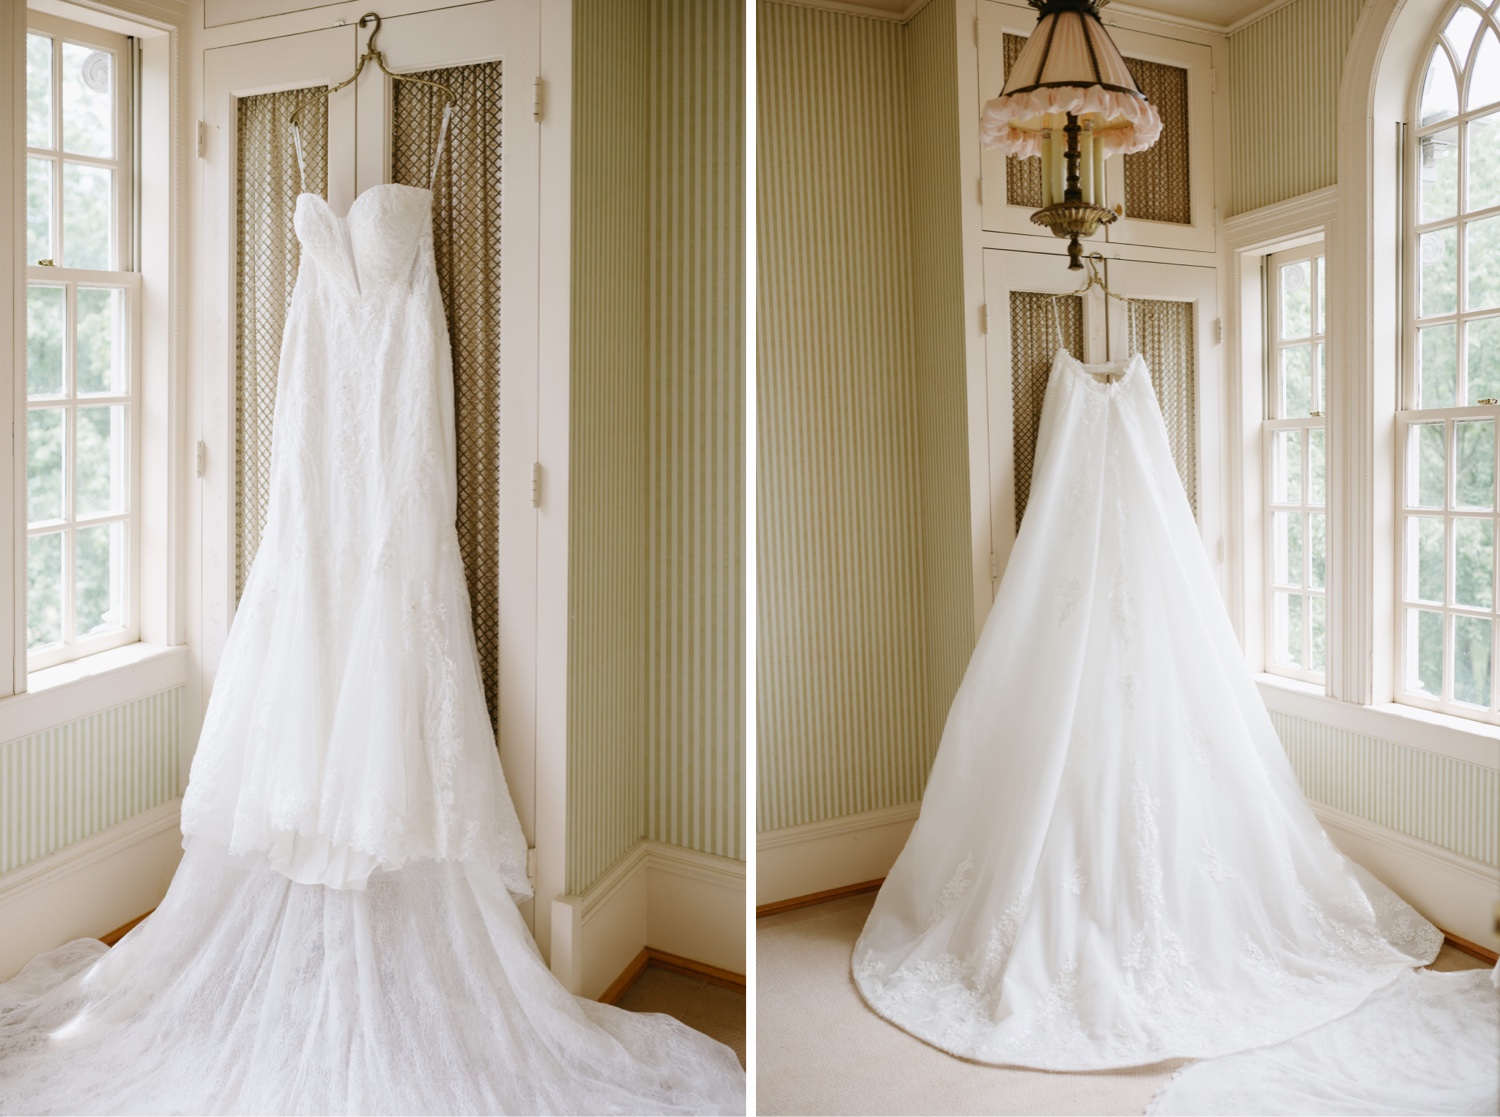 wedding dress details hanging natural lighting